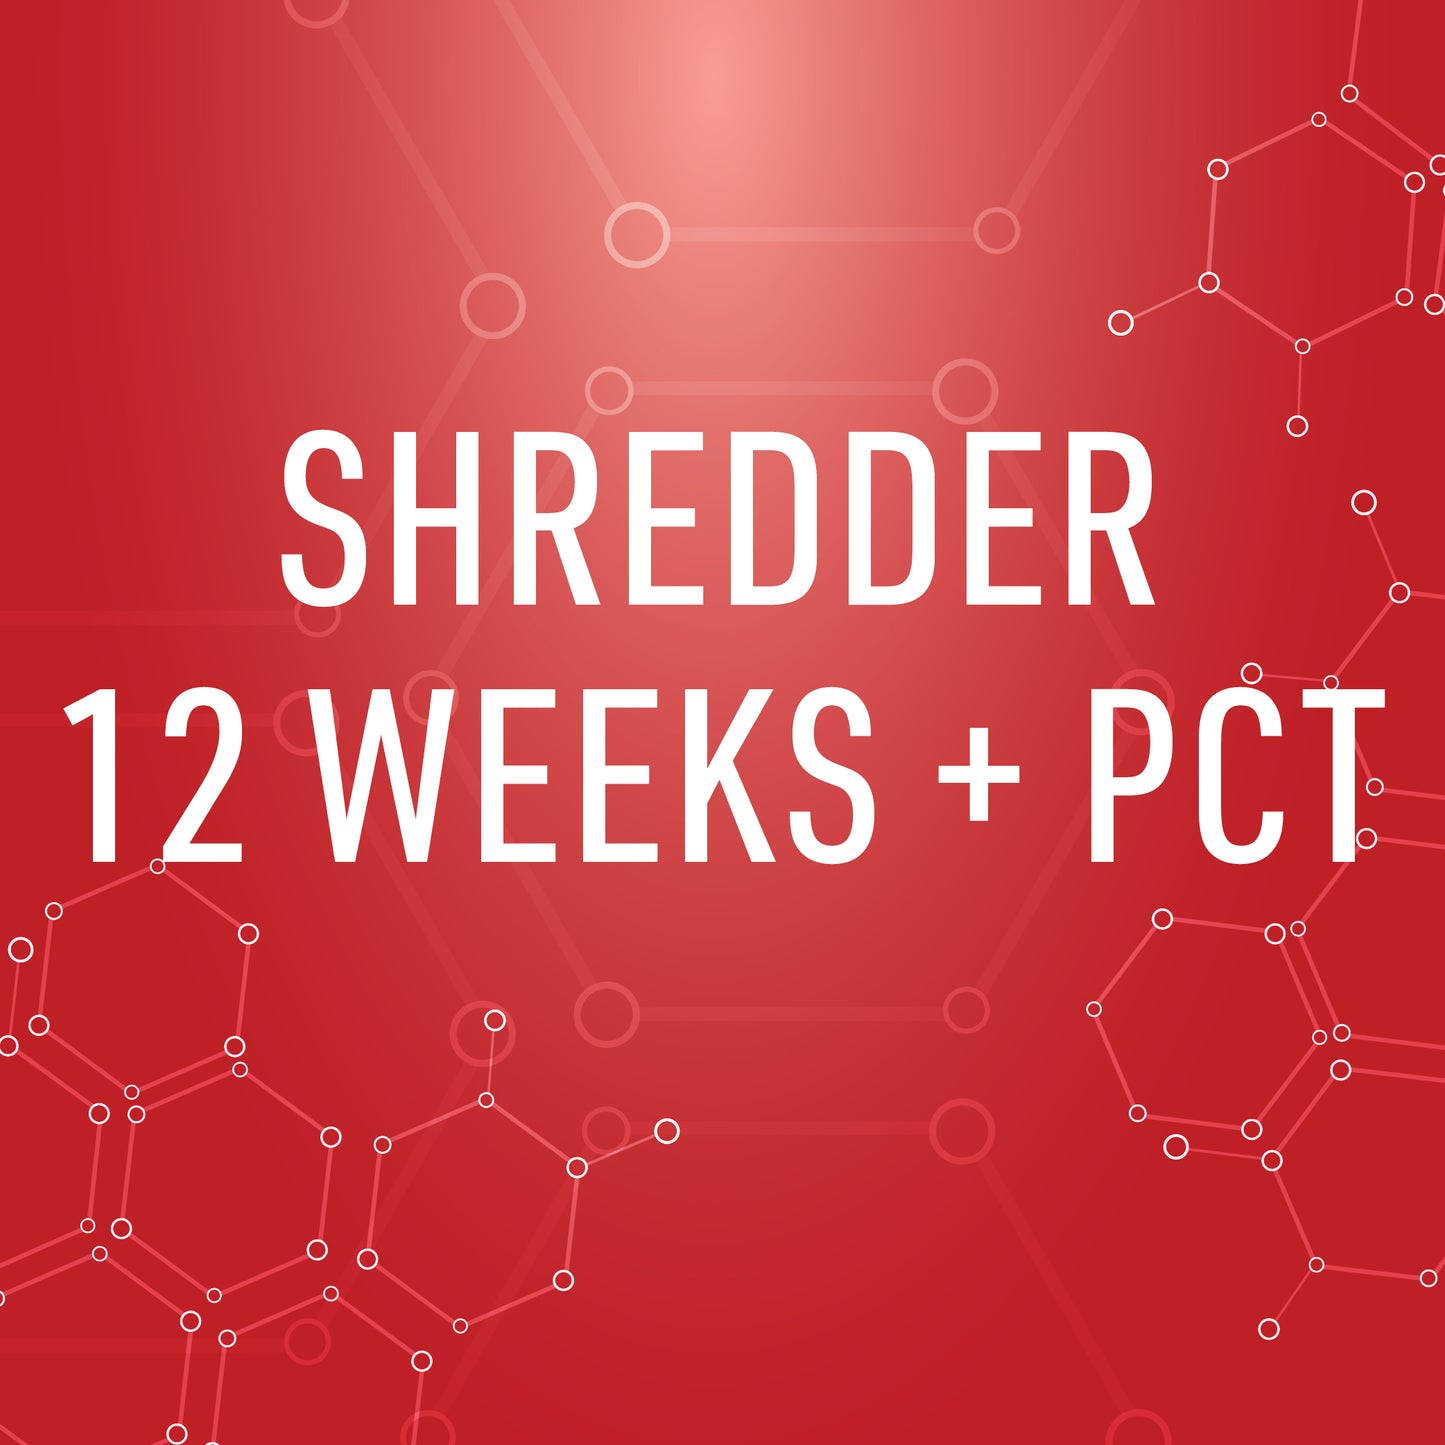 SHREDDER 12 WEEK+PCT